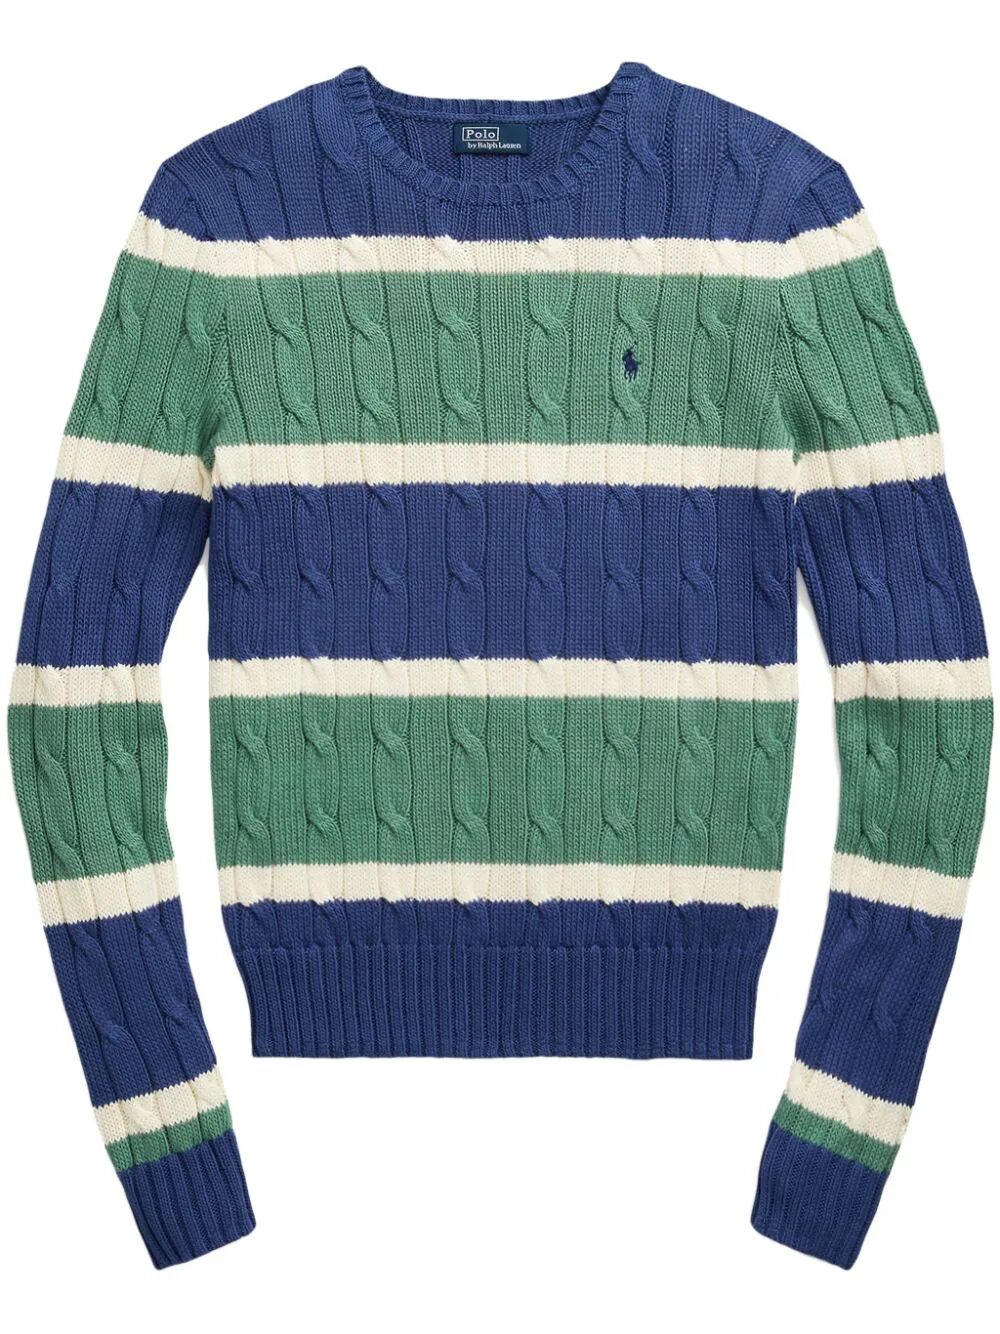 Crew Neck Braided Striped Sweater